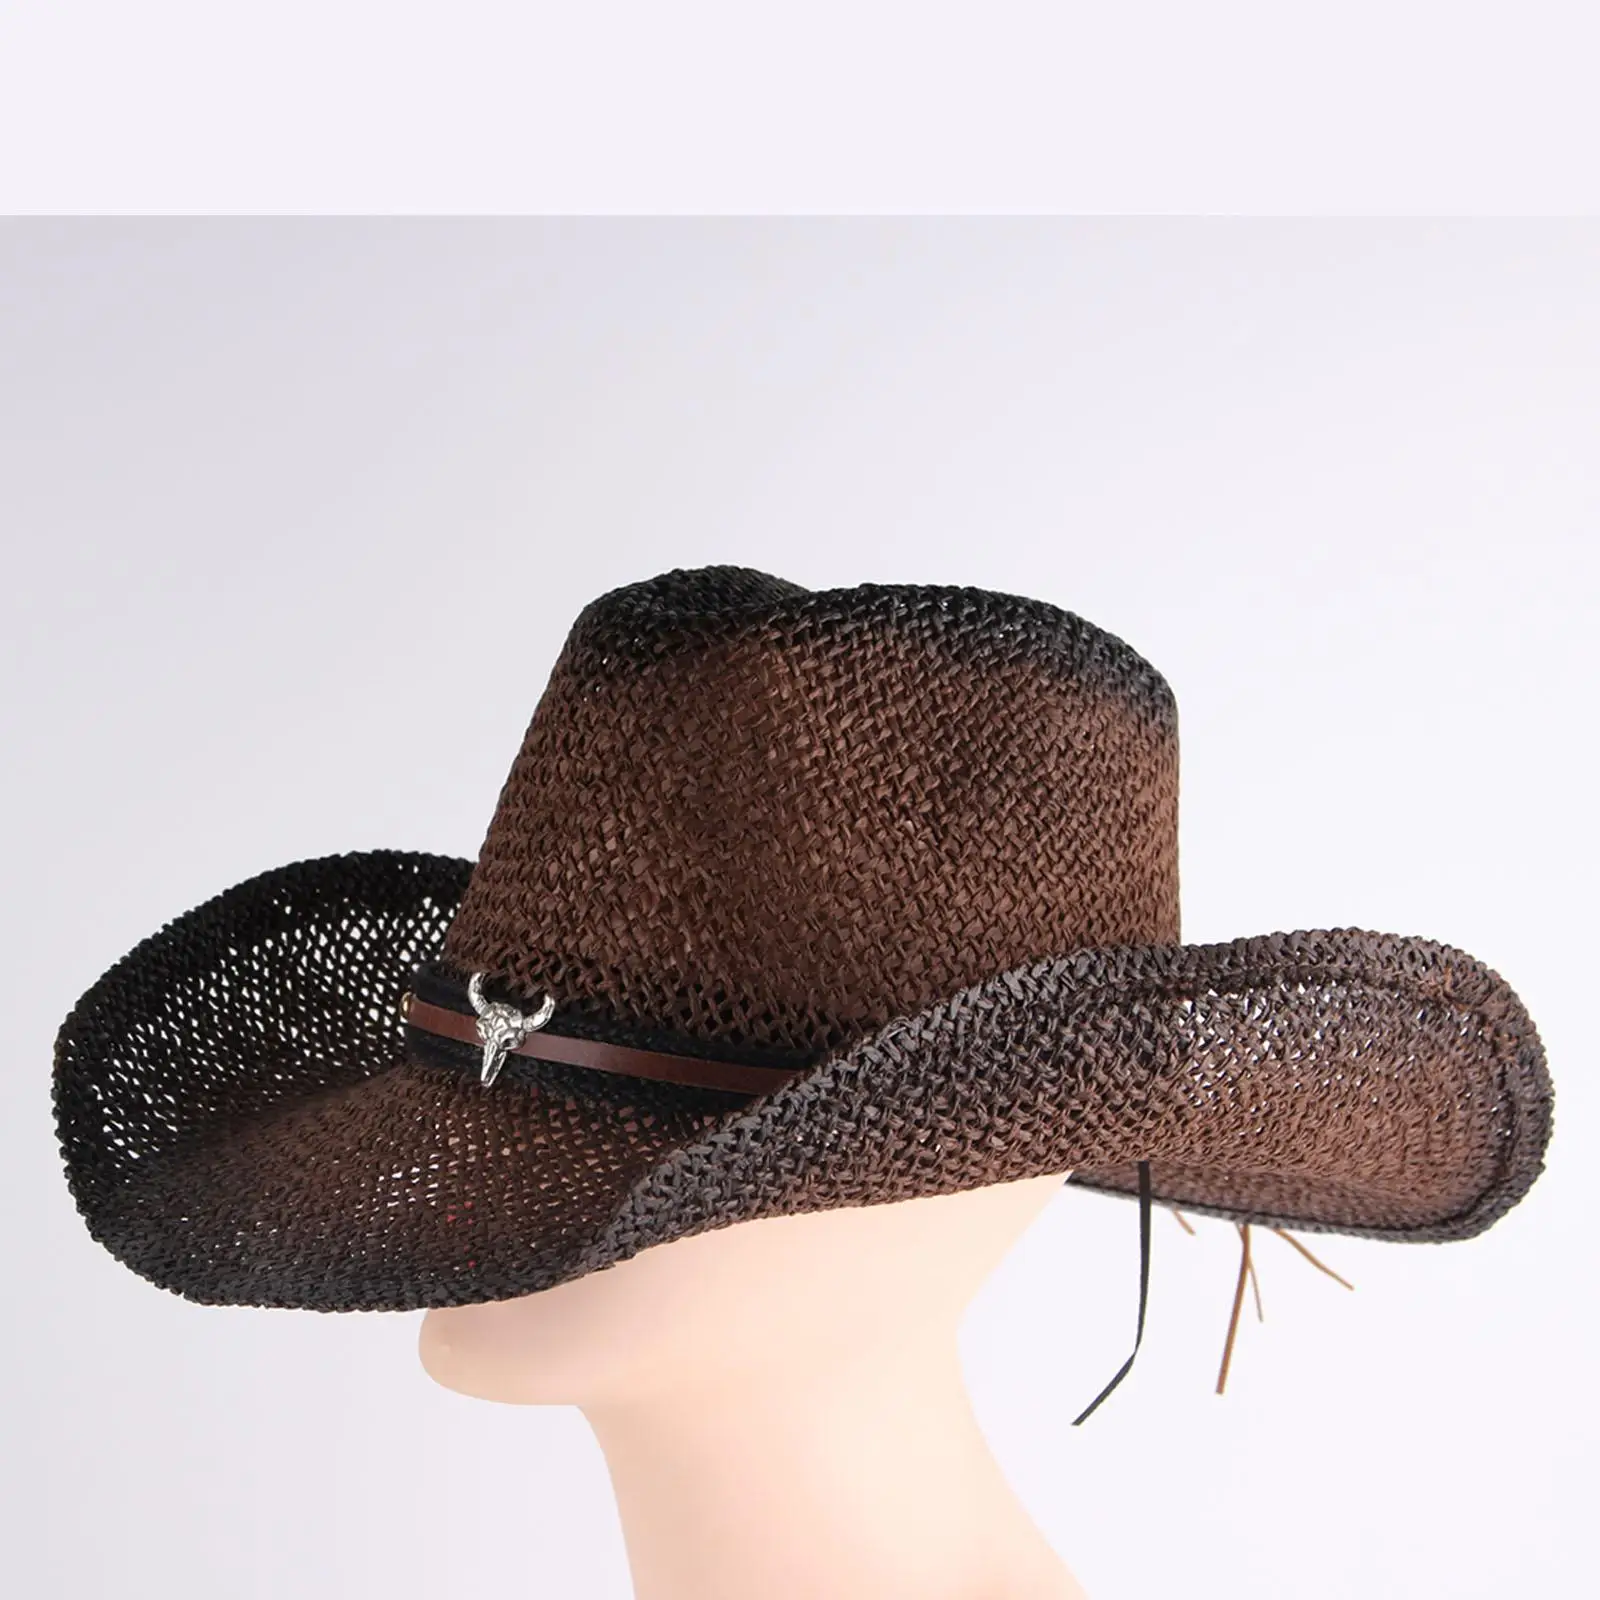 Straw Cowboy hat Shapeable Sombreros Vagueros Sunscreen Hat Unisex Cowboy Hats for beach Rodeo summer